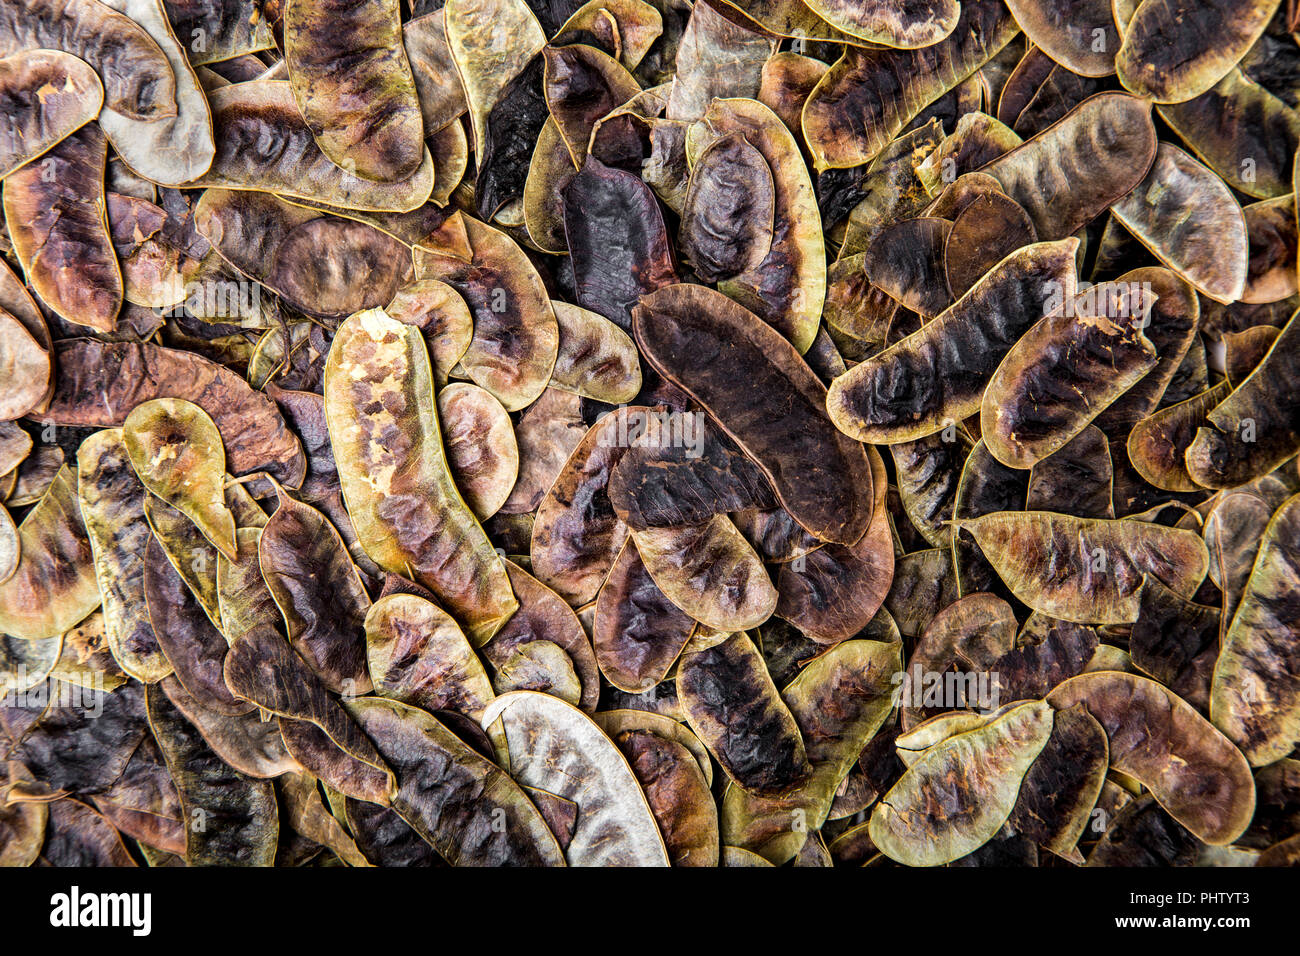 Dried Senna Pods (Cassia angustifolia) Stock Photo